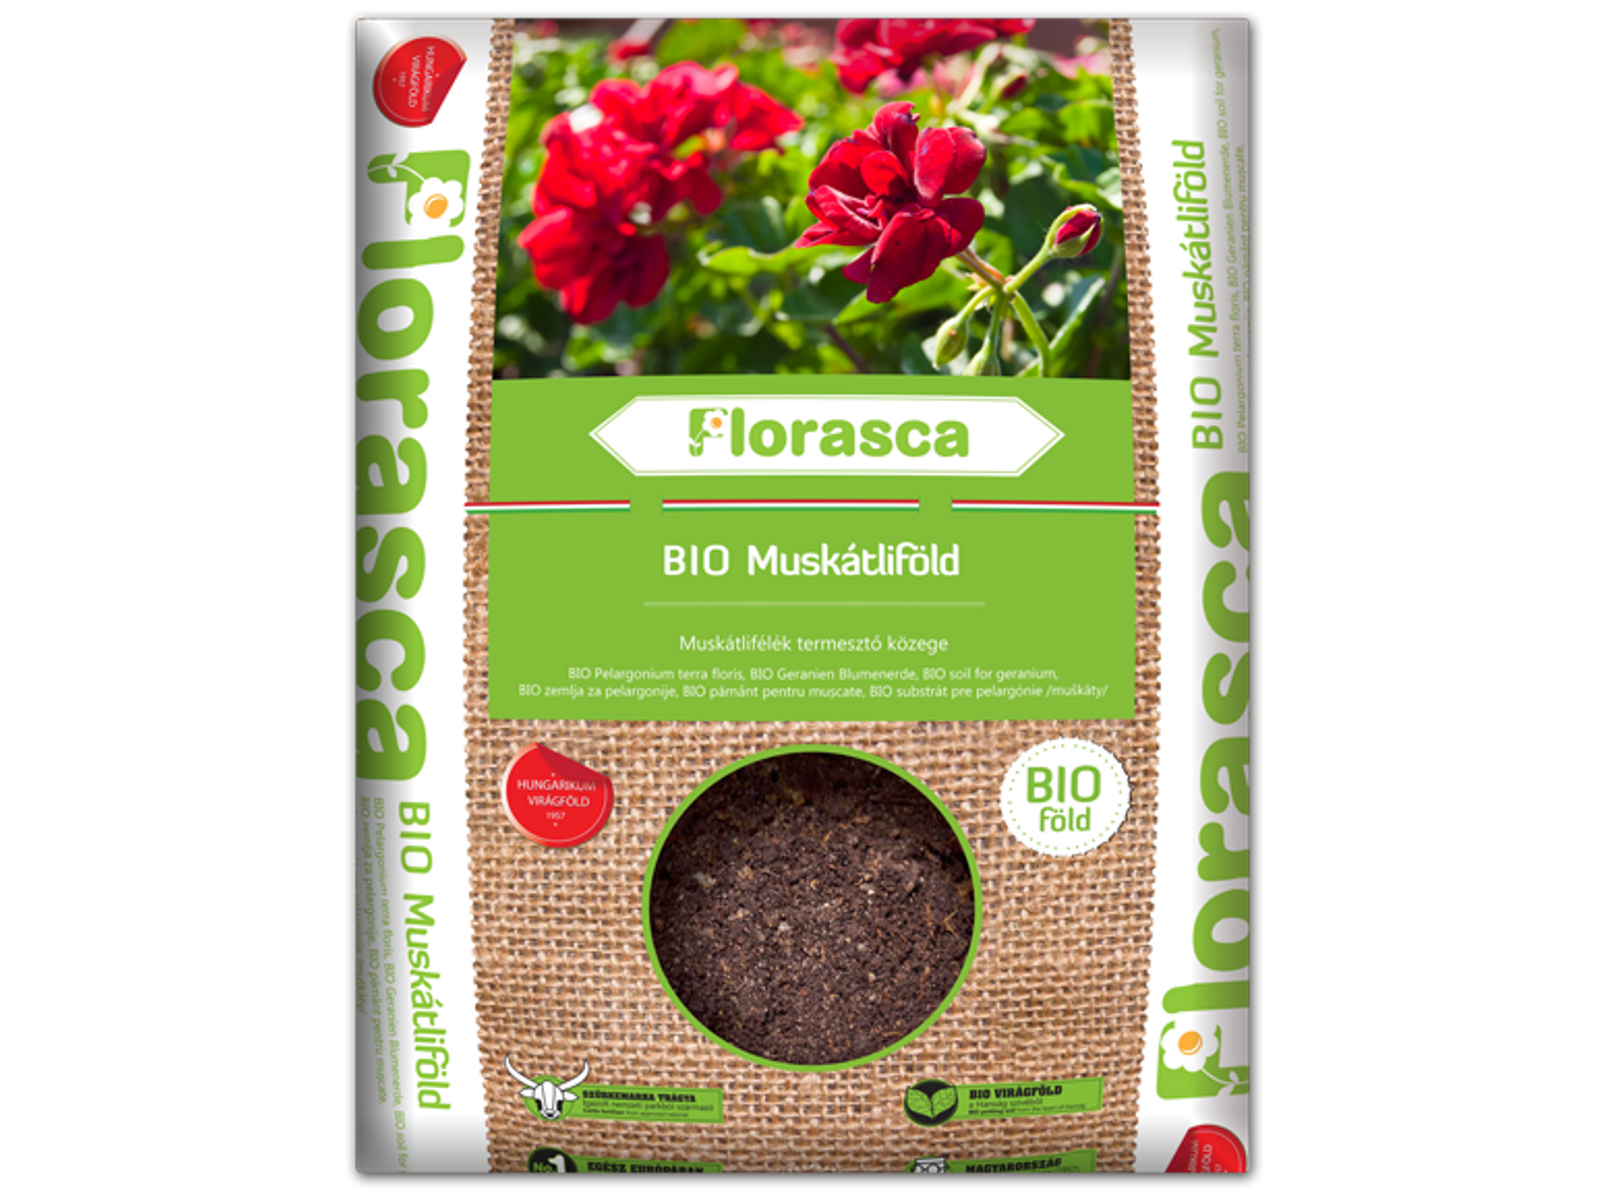 Florasca biomuskátliföld | 10 liter